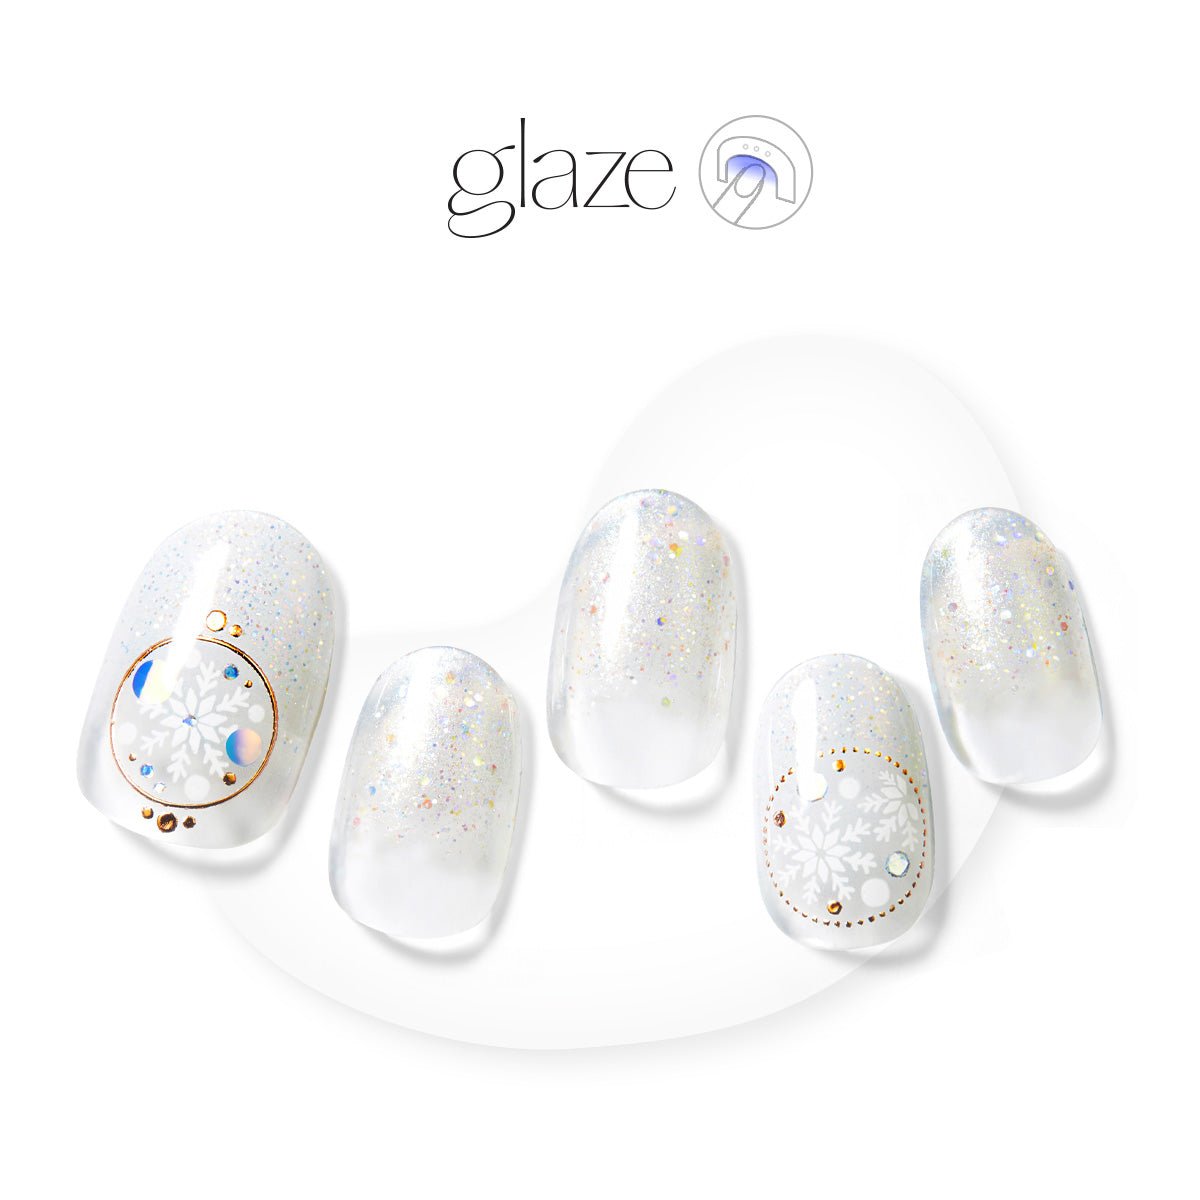 Snow Glass - Glaze Art - Manicure - Dashing Diva Singapore